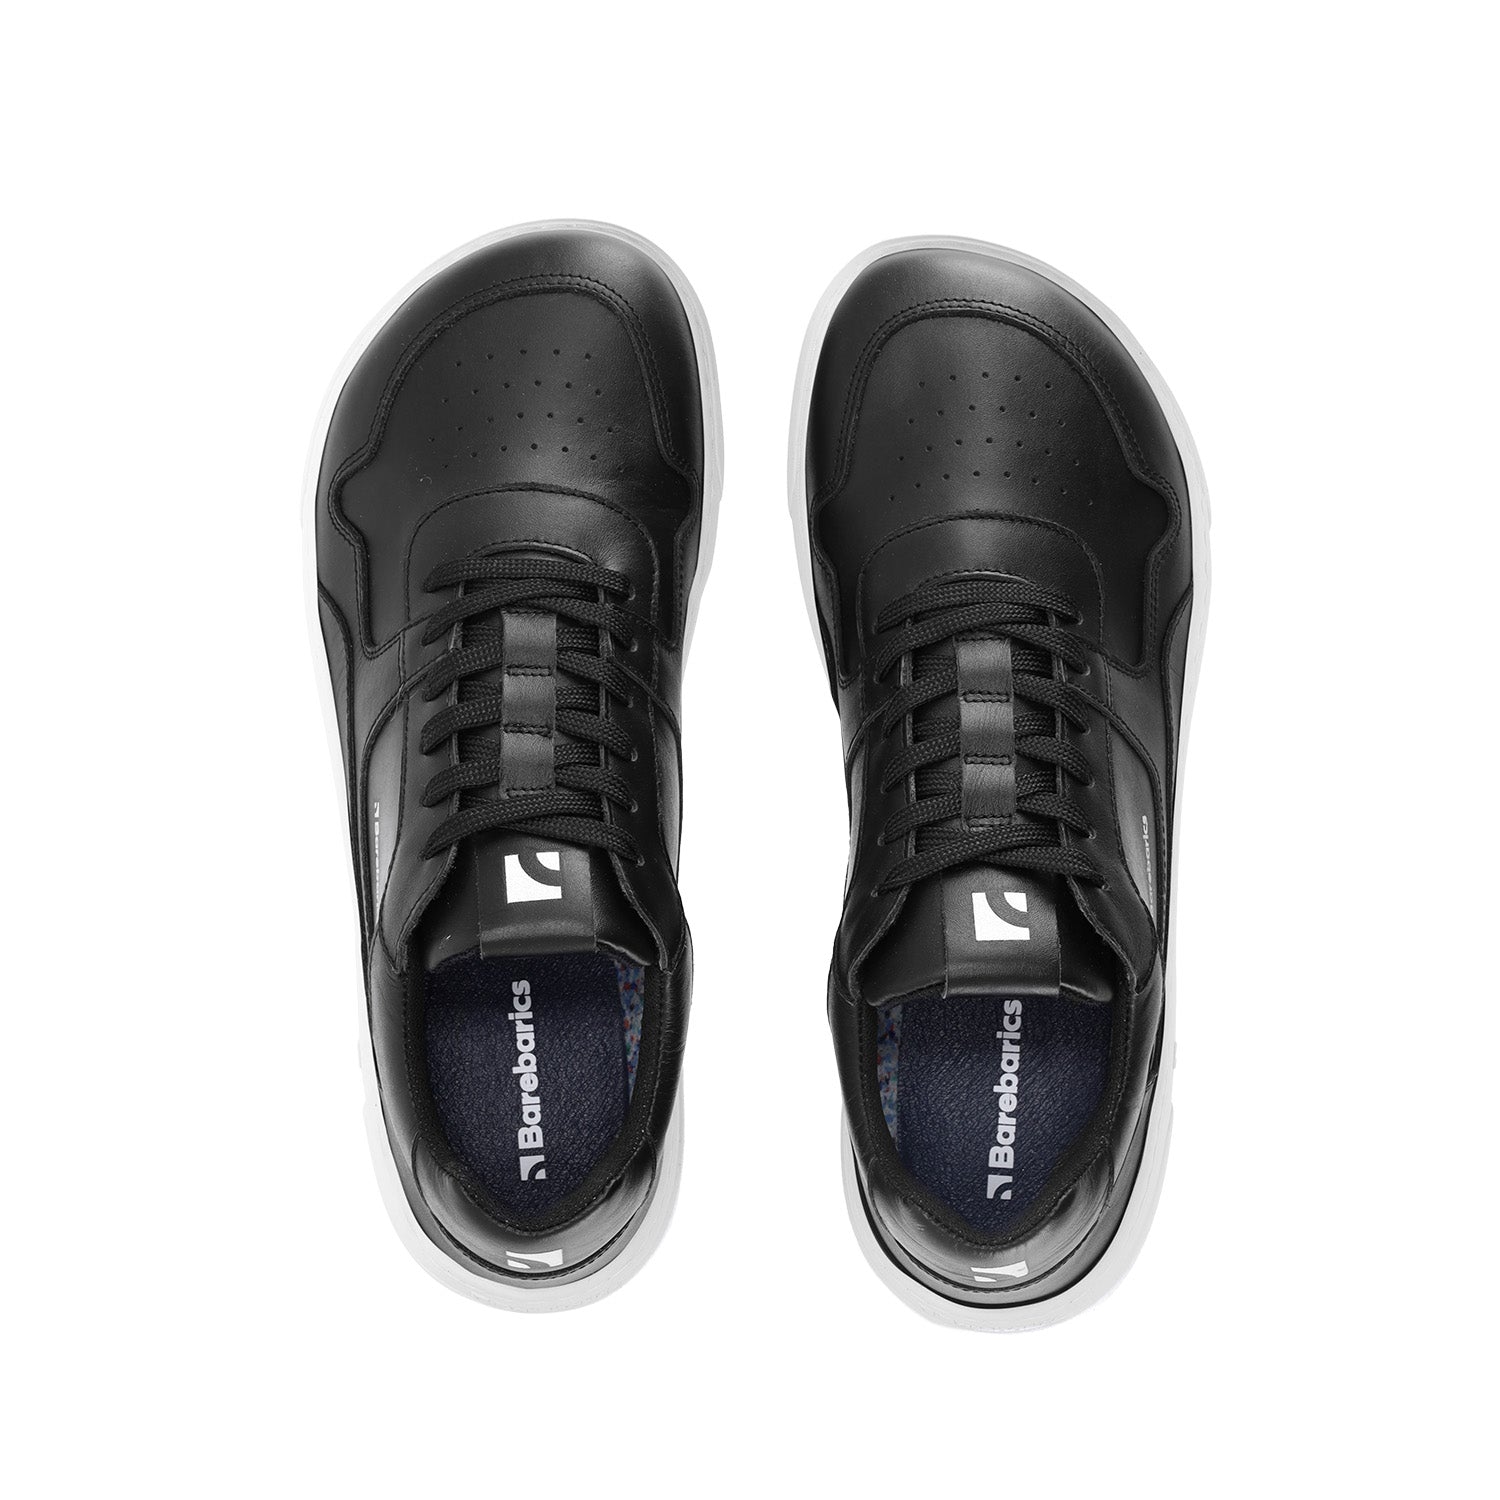 Barefoot Sneakers Barebarics Zing - Black & White - Leather 5 OzBarefoot Australia